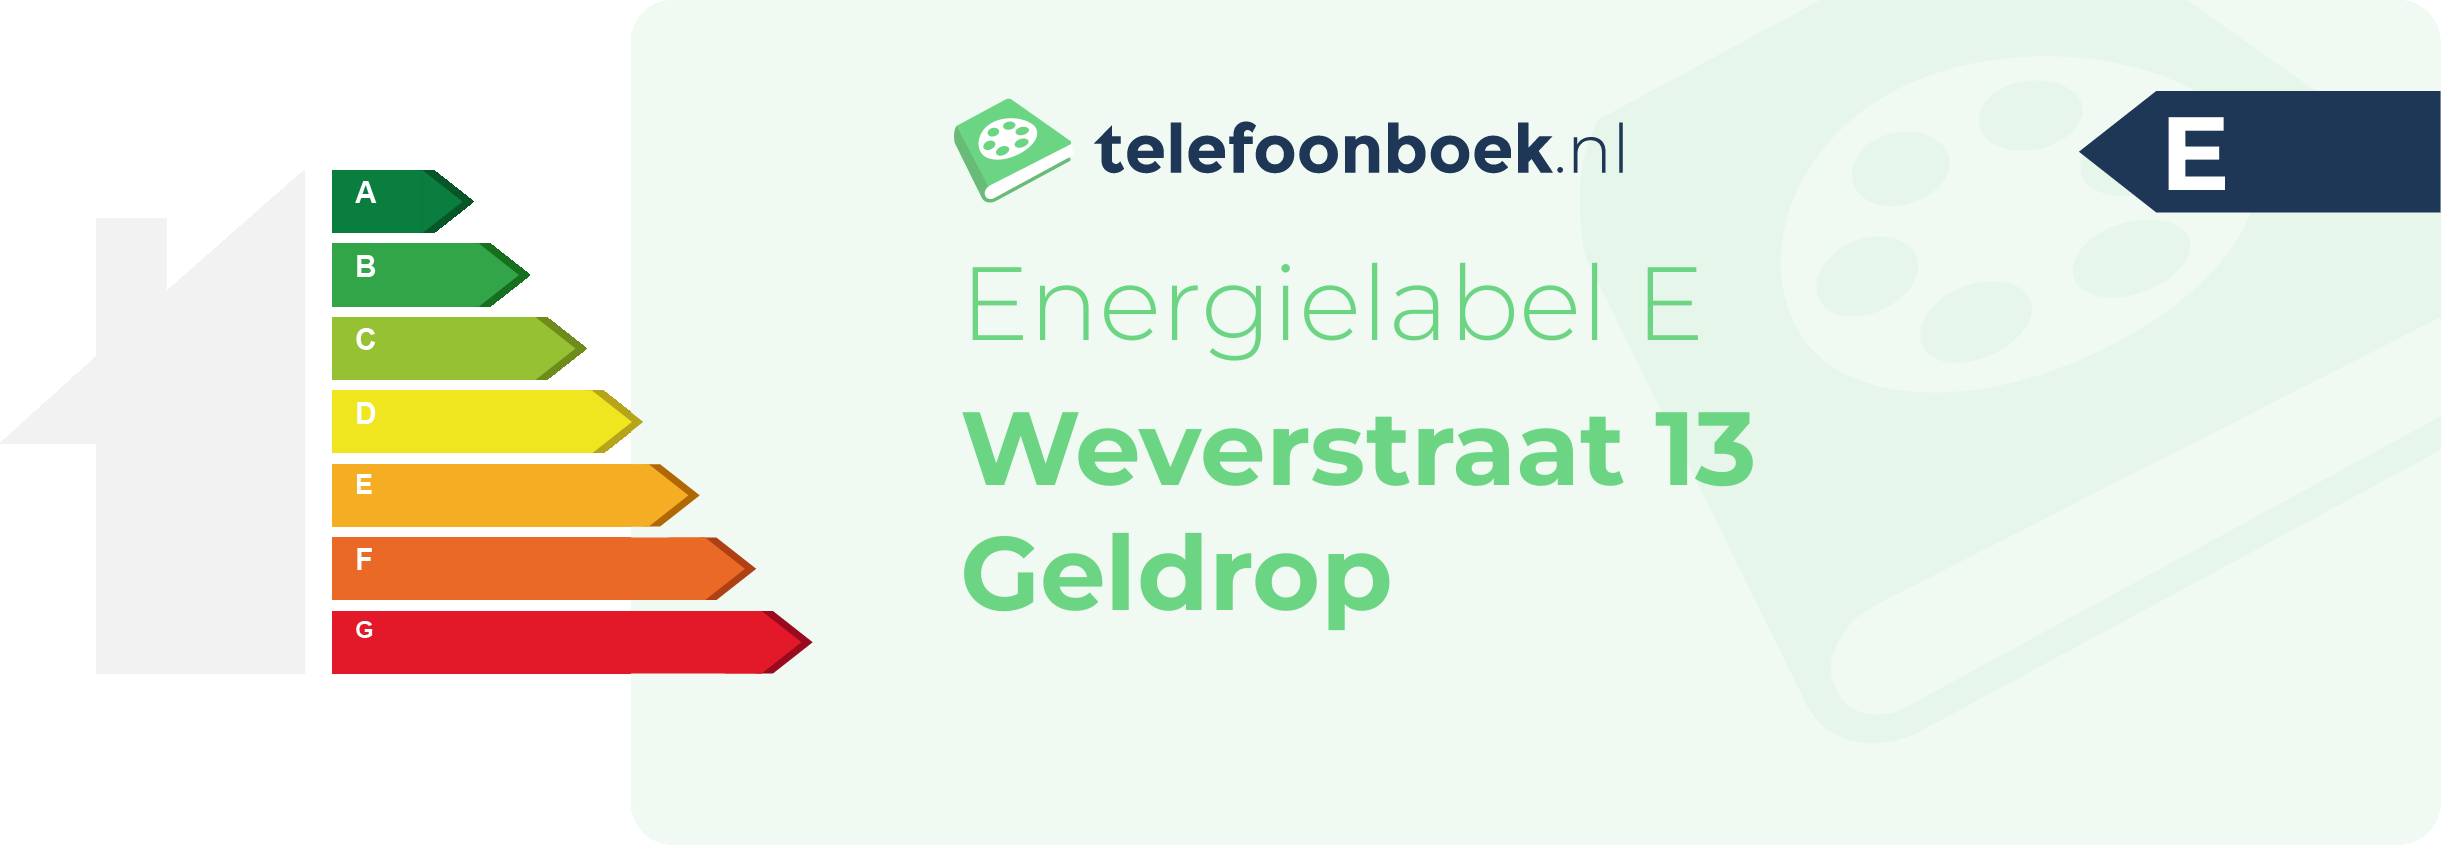 Energielabel Weverstraat 13 Geldrop